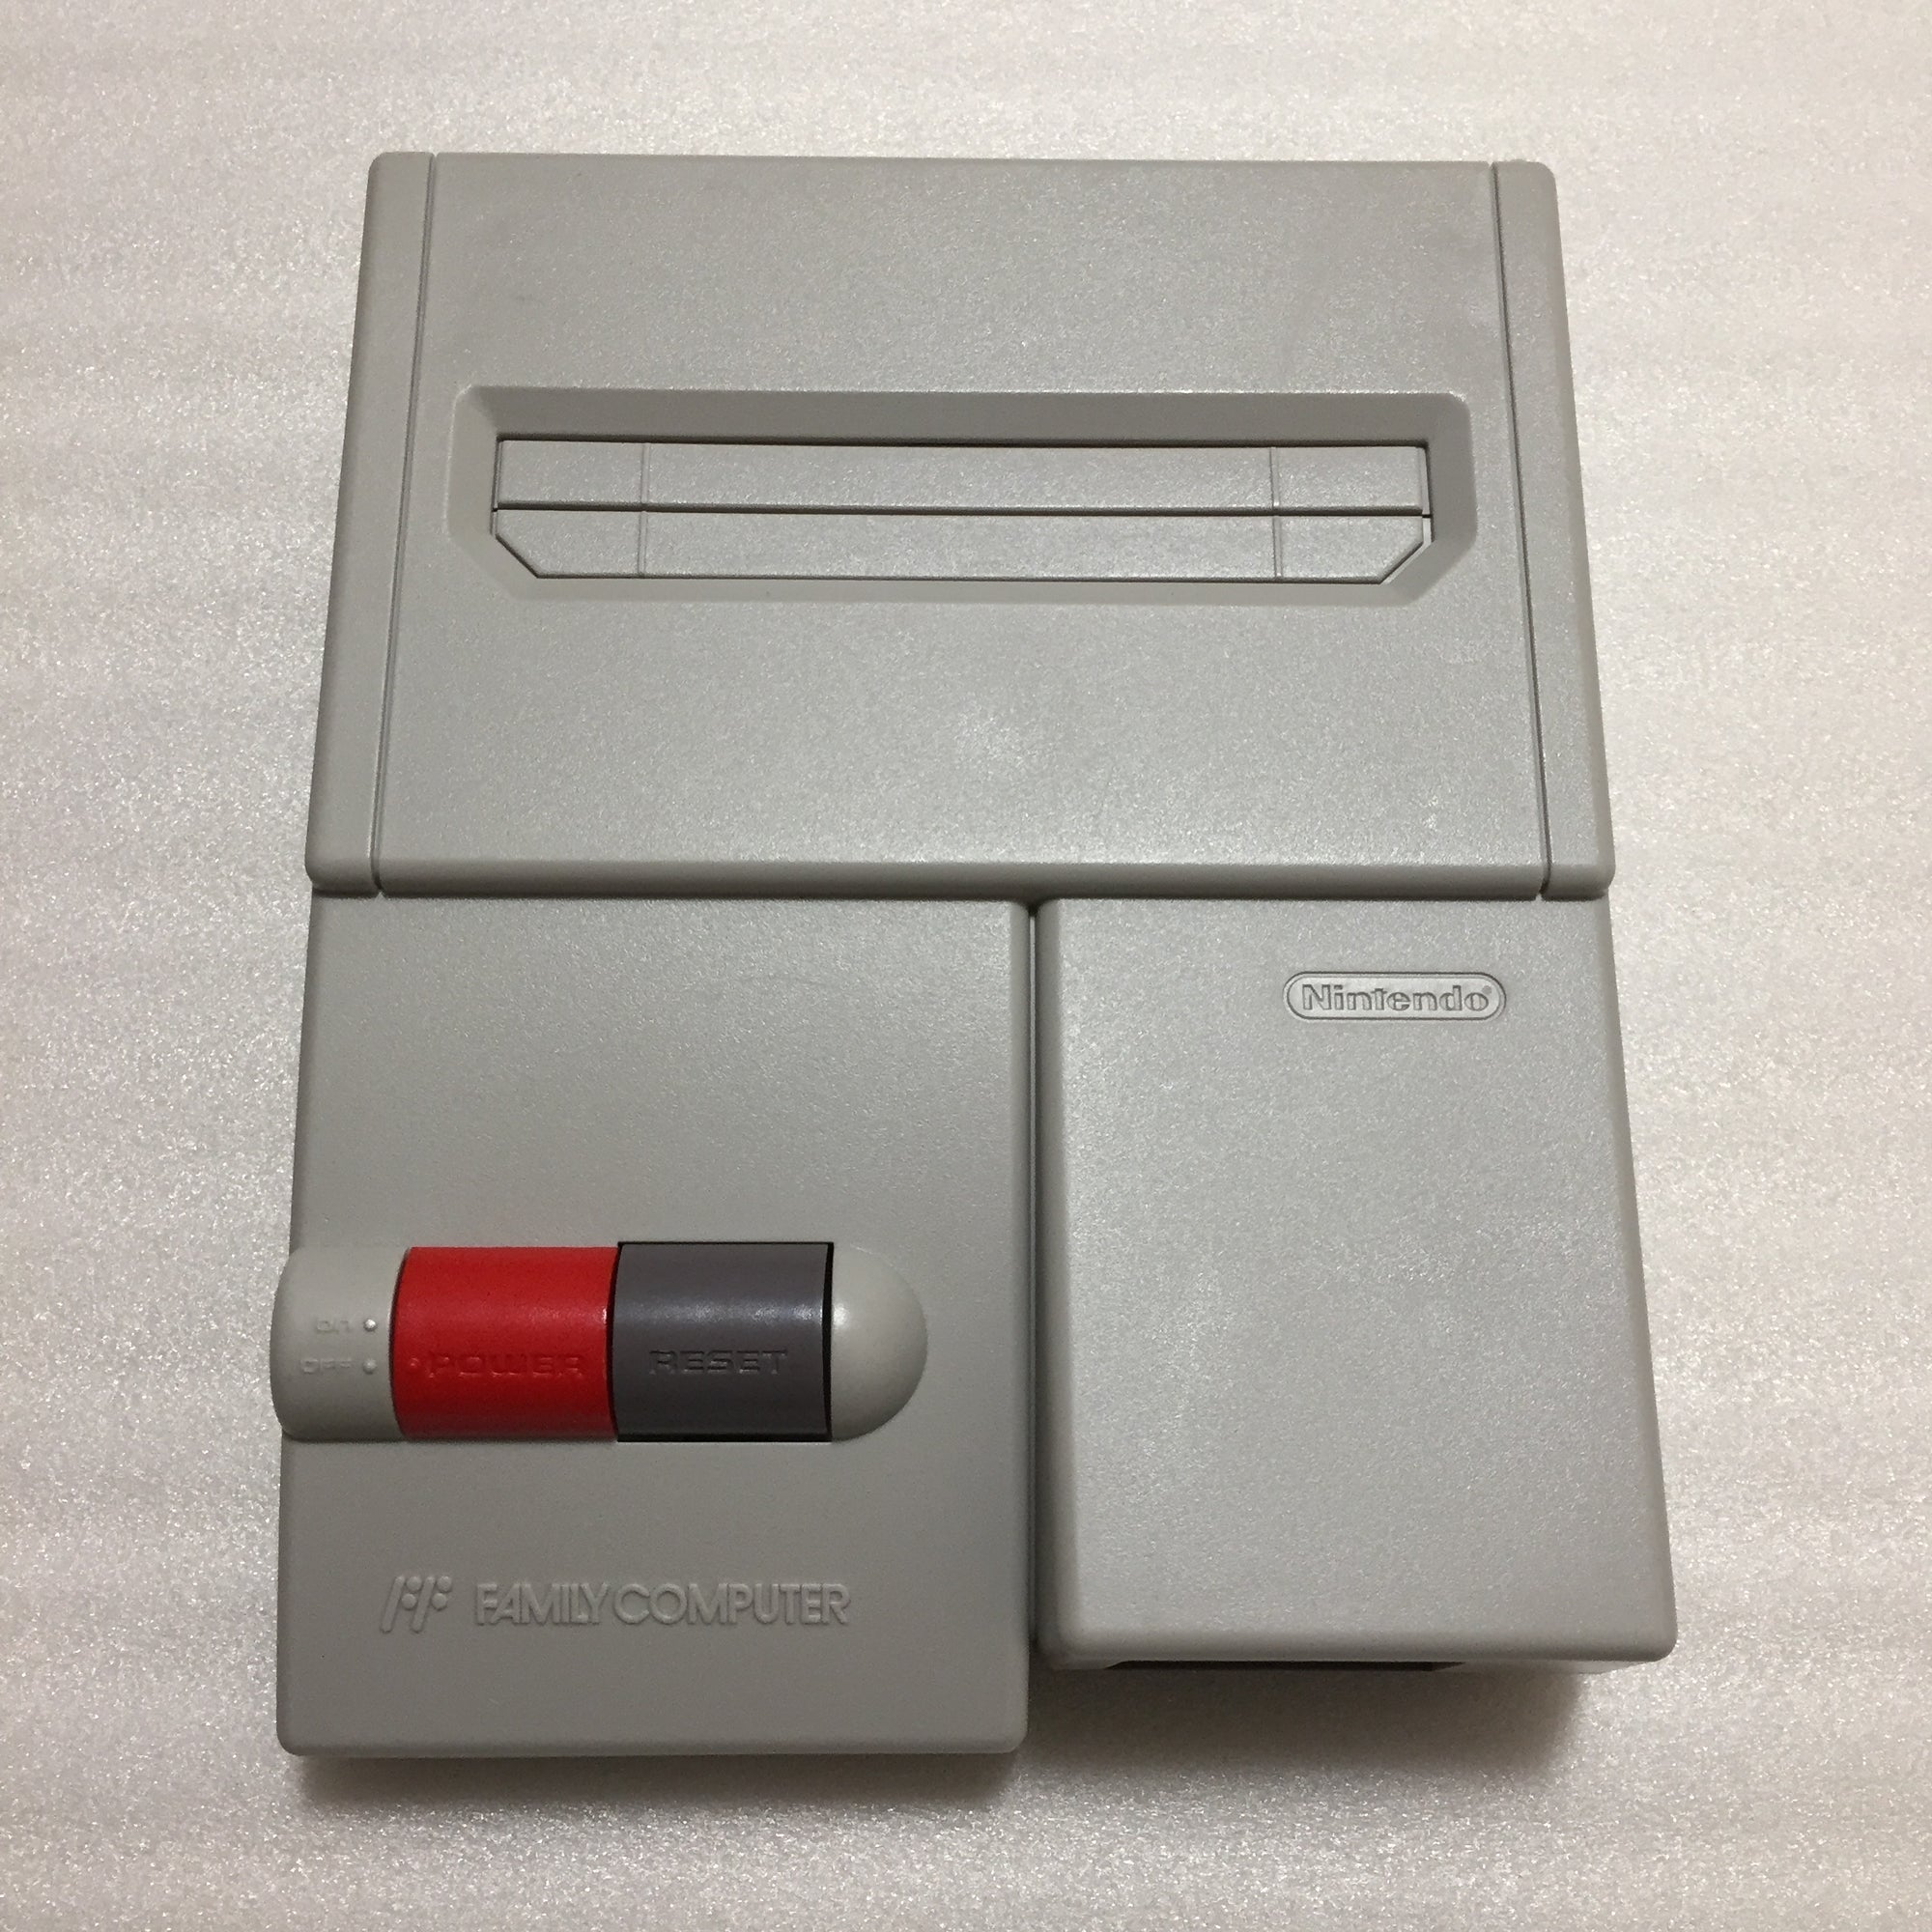 AV Famicom with NESRGB kit - System only